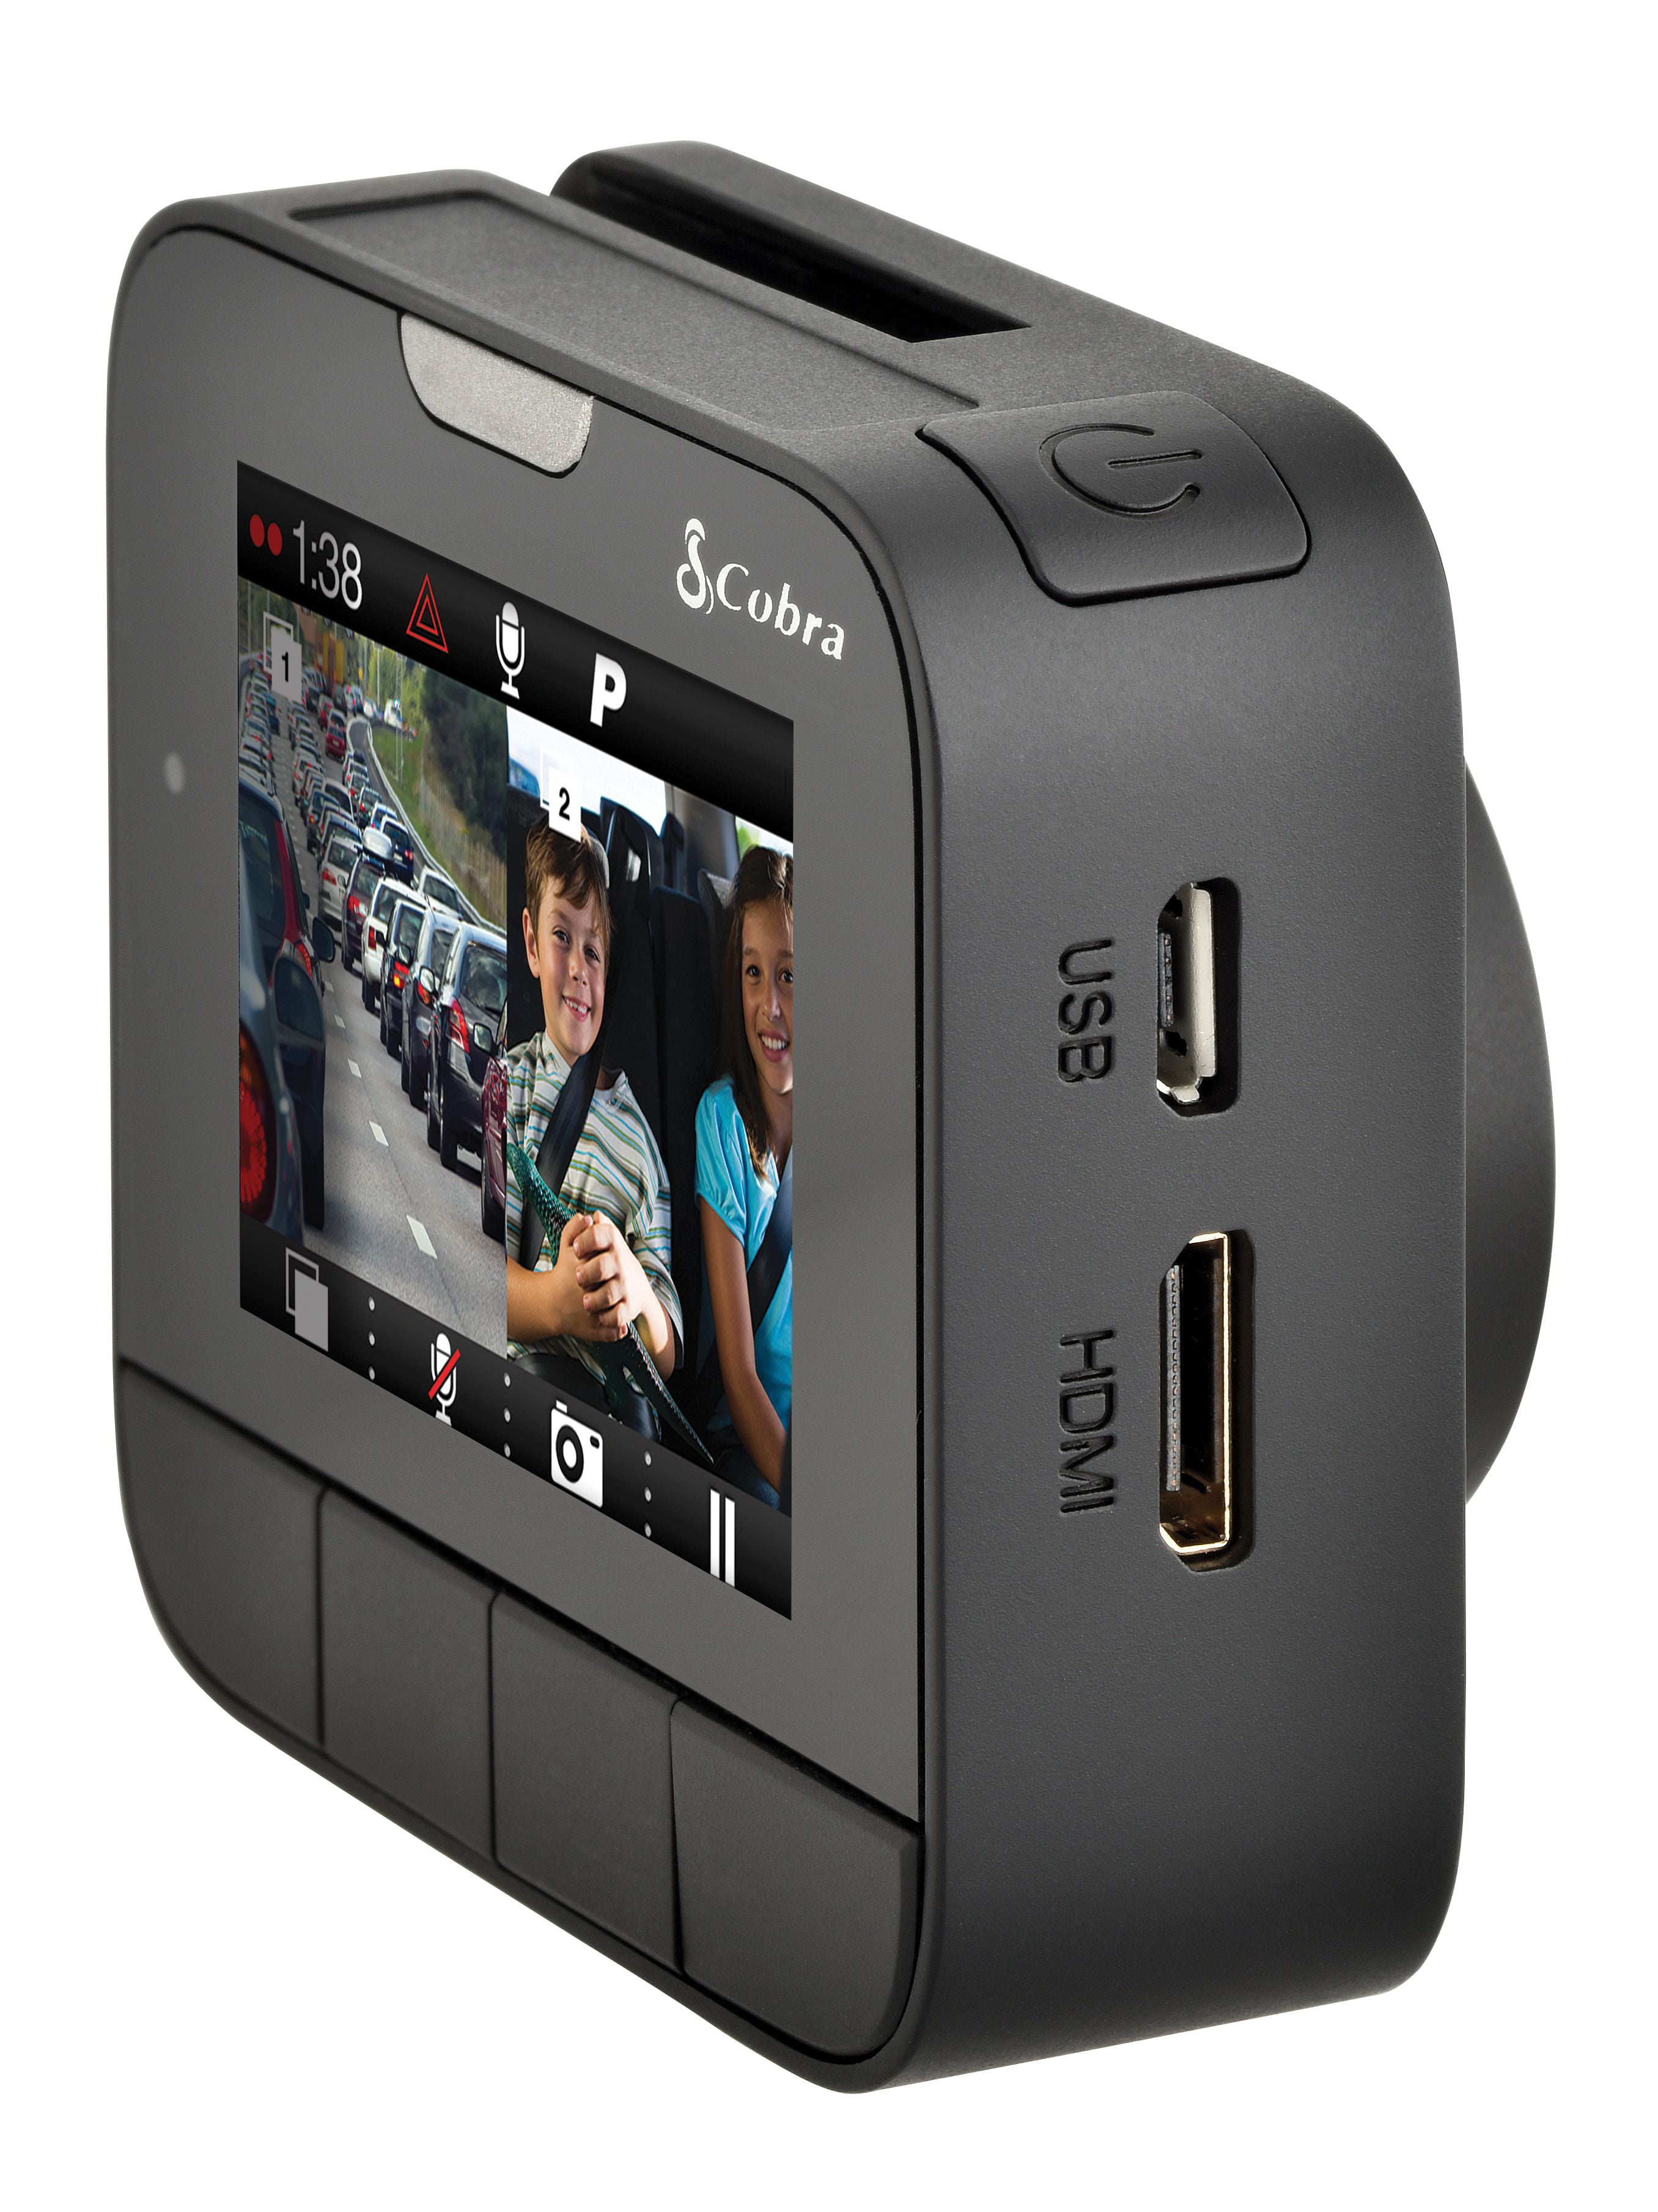 Cobra CDR 855BT HD dash cam with Bluetooth® at Crutchfield